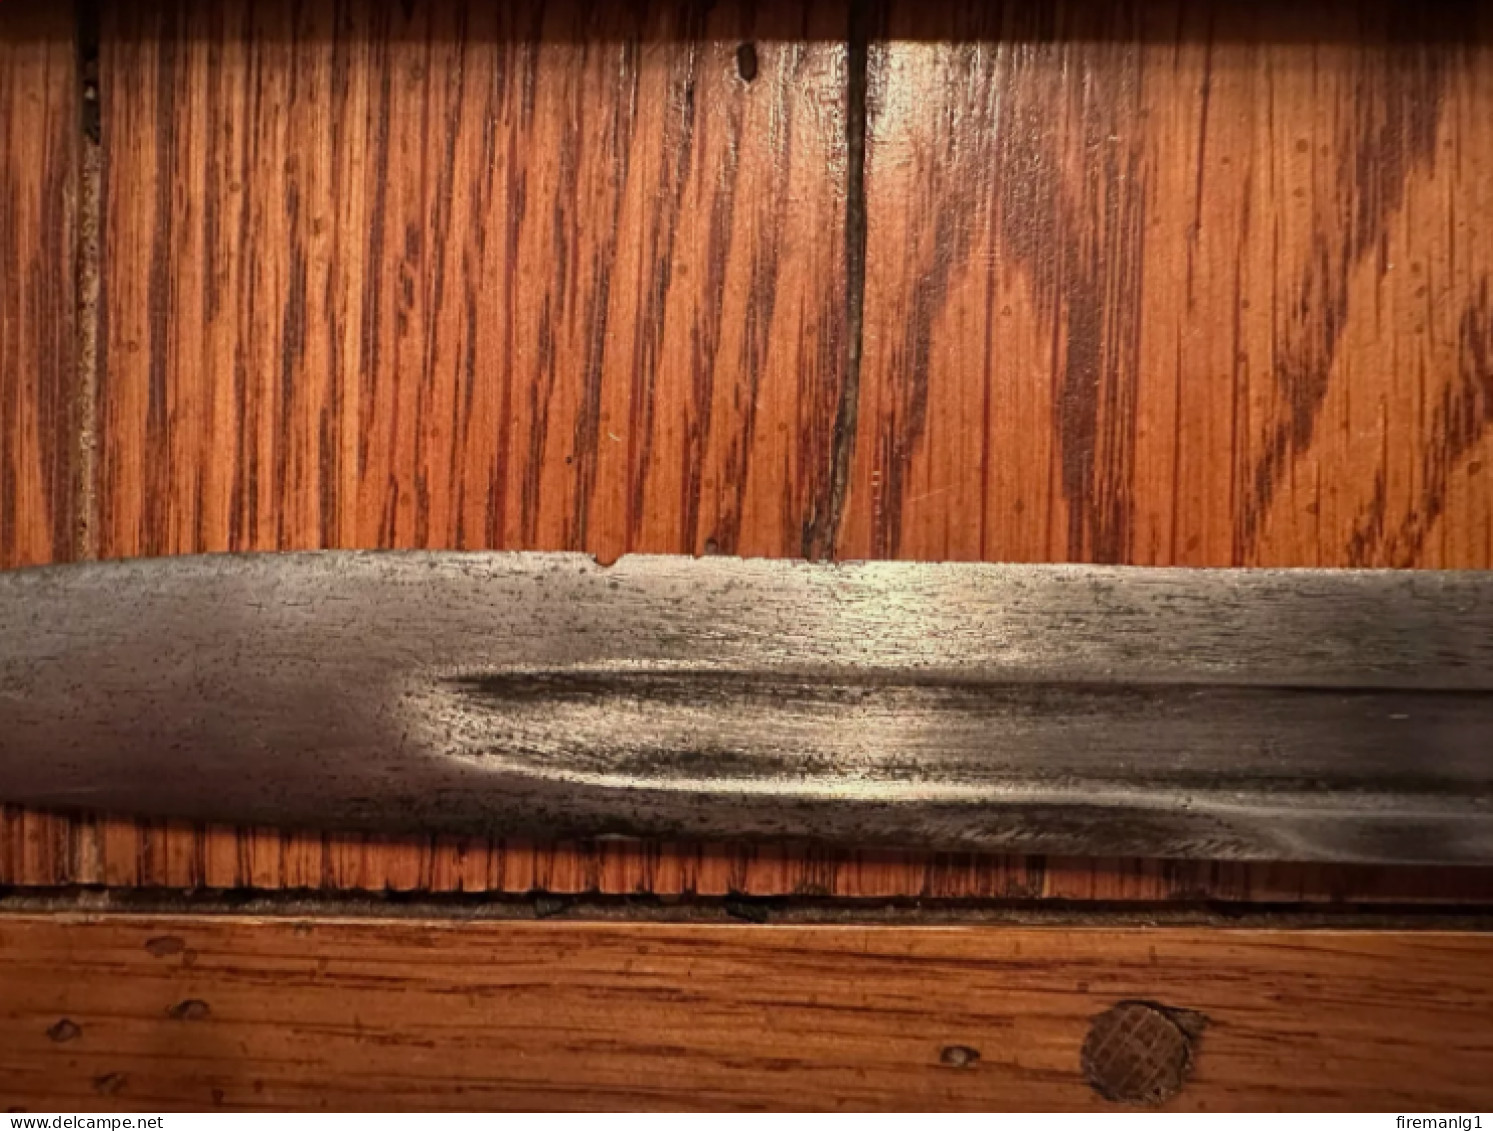 WW1 US MODEL 1905 BAYONET WITH SCABBARD SPRINGFIELD ARSENAL 1916 MINTY - Knives/Swords